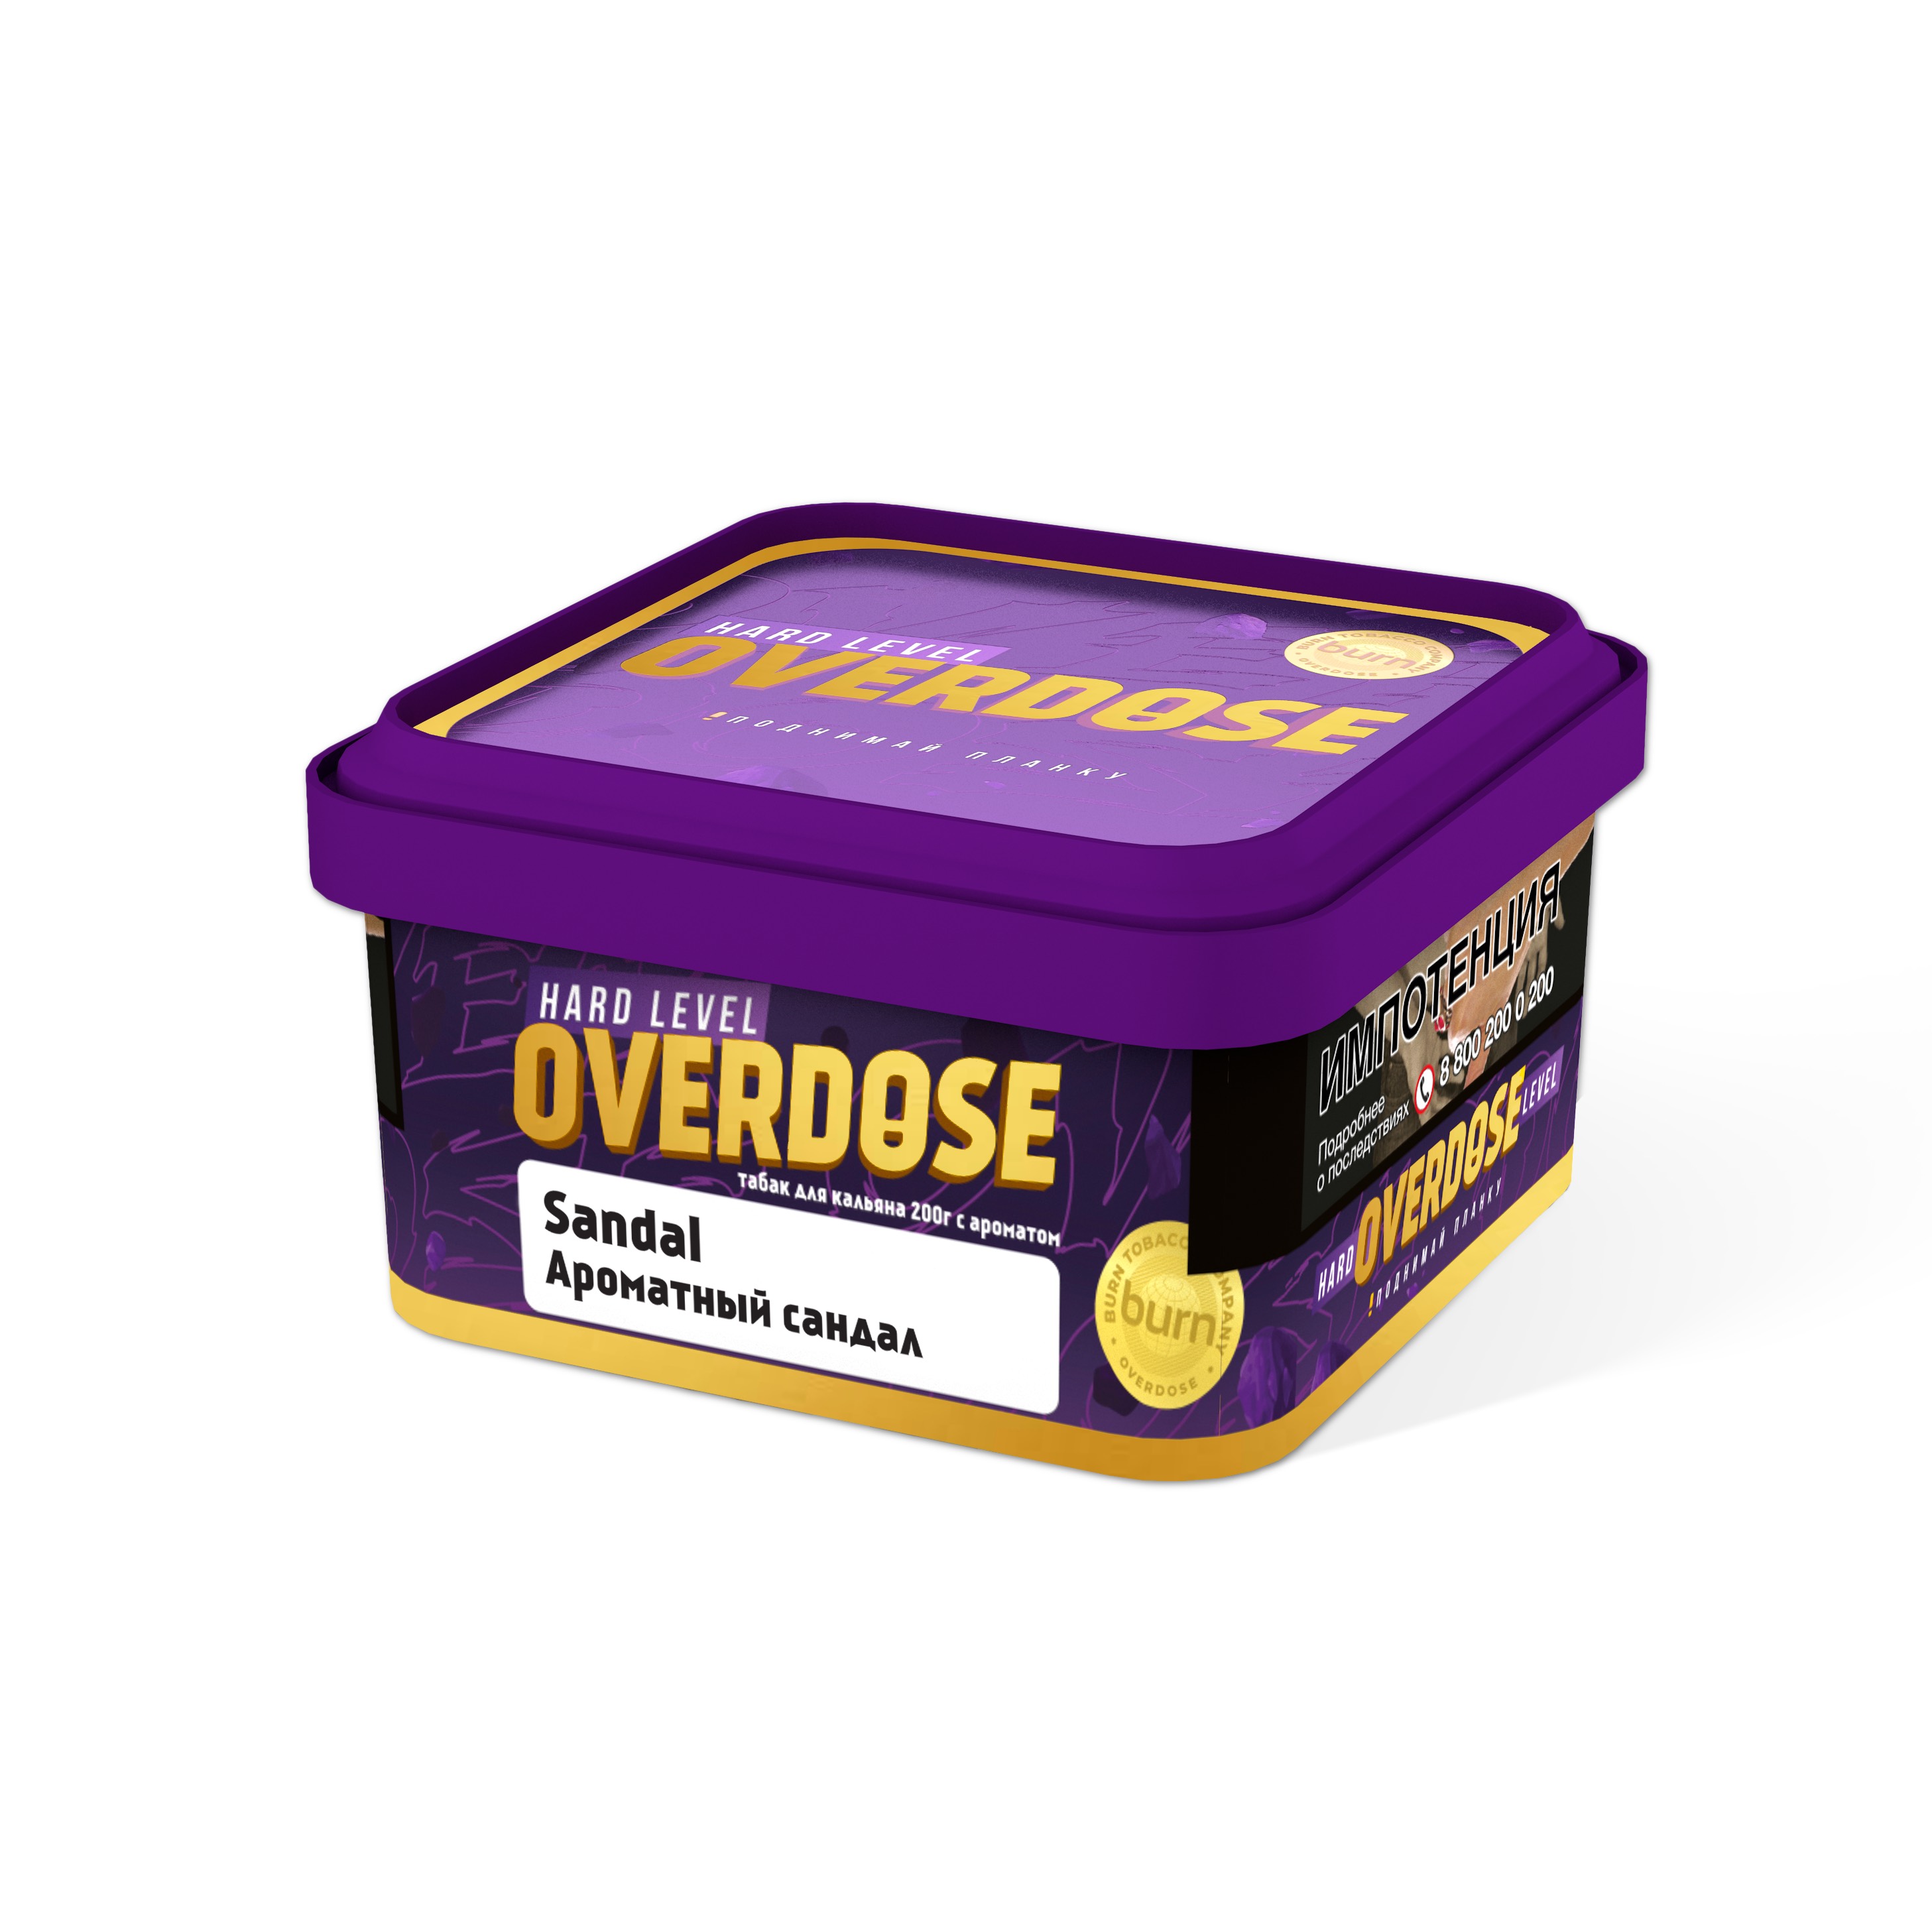 Табак - Overdose - SANDAL - 200 g